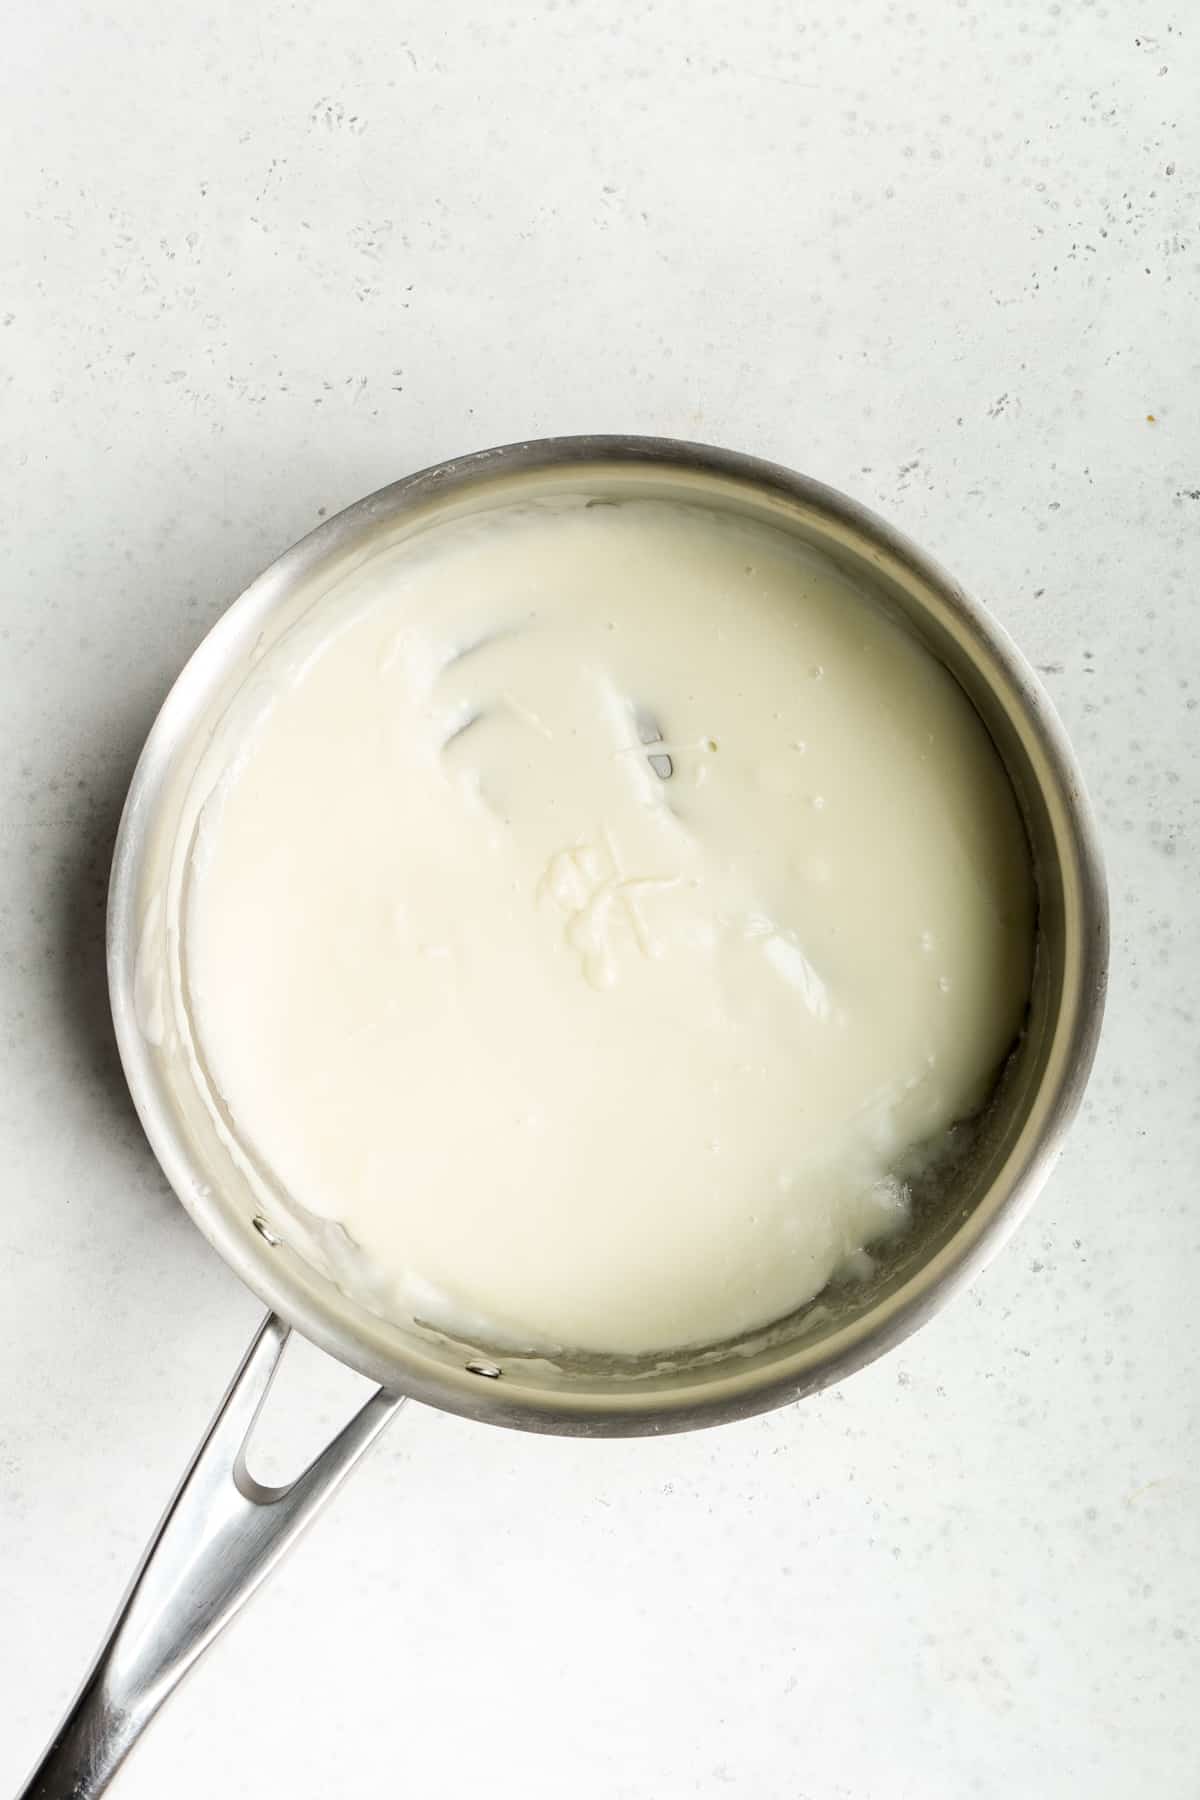 Pecorino cream in a pan